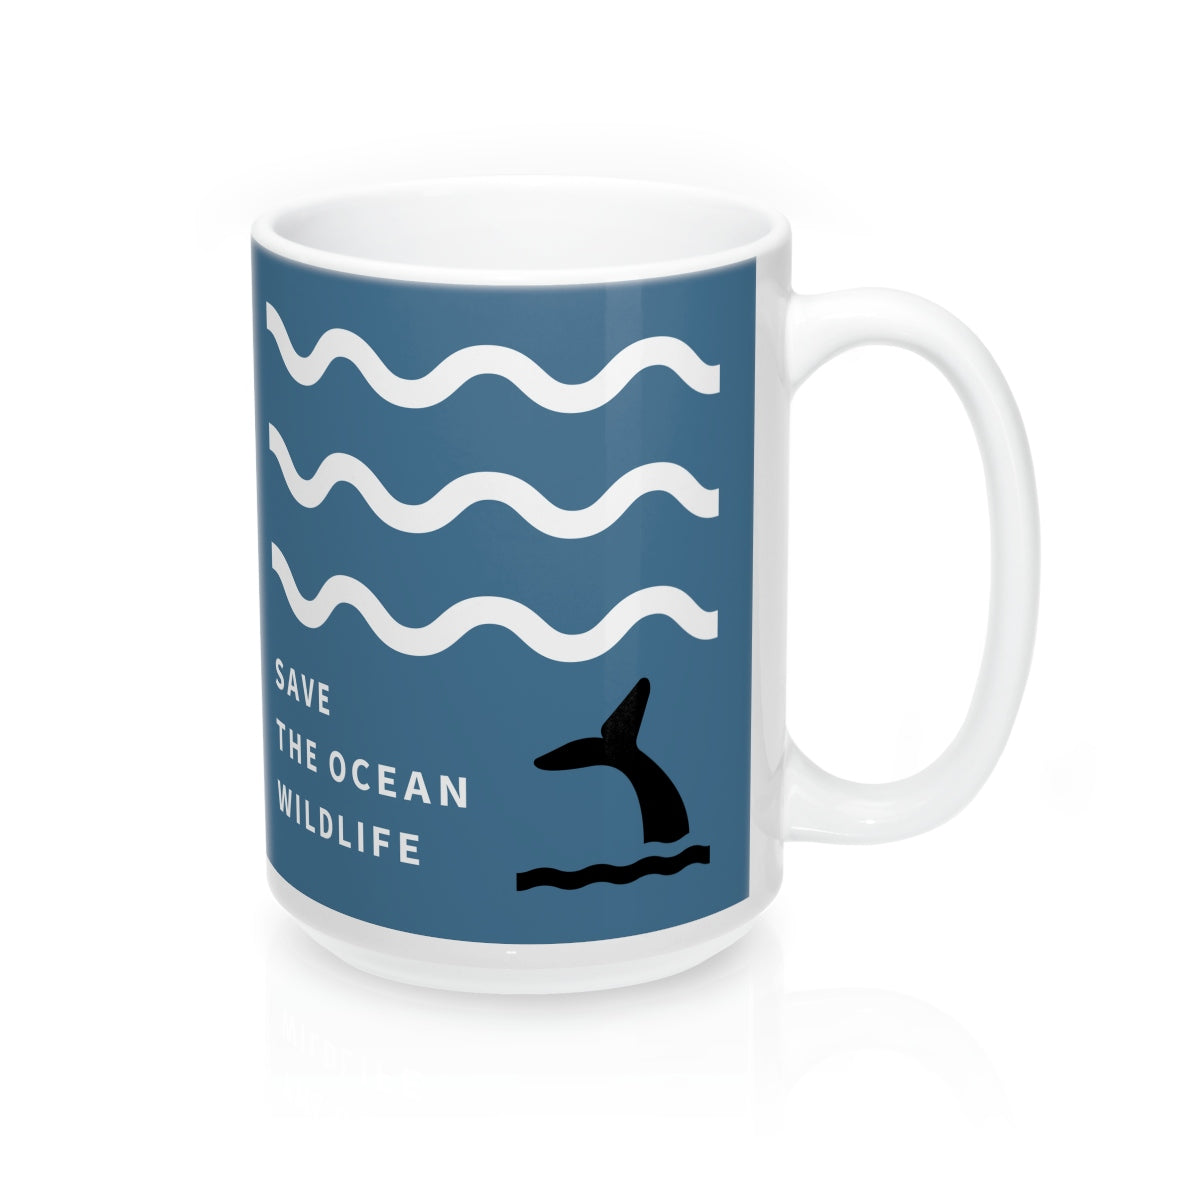 Save The Ocaen Wildlife Mug